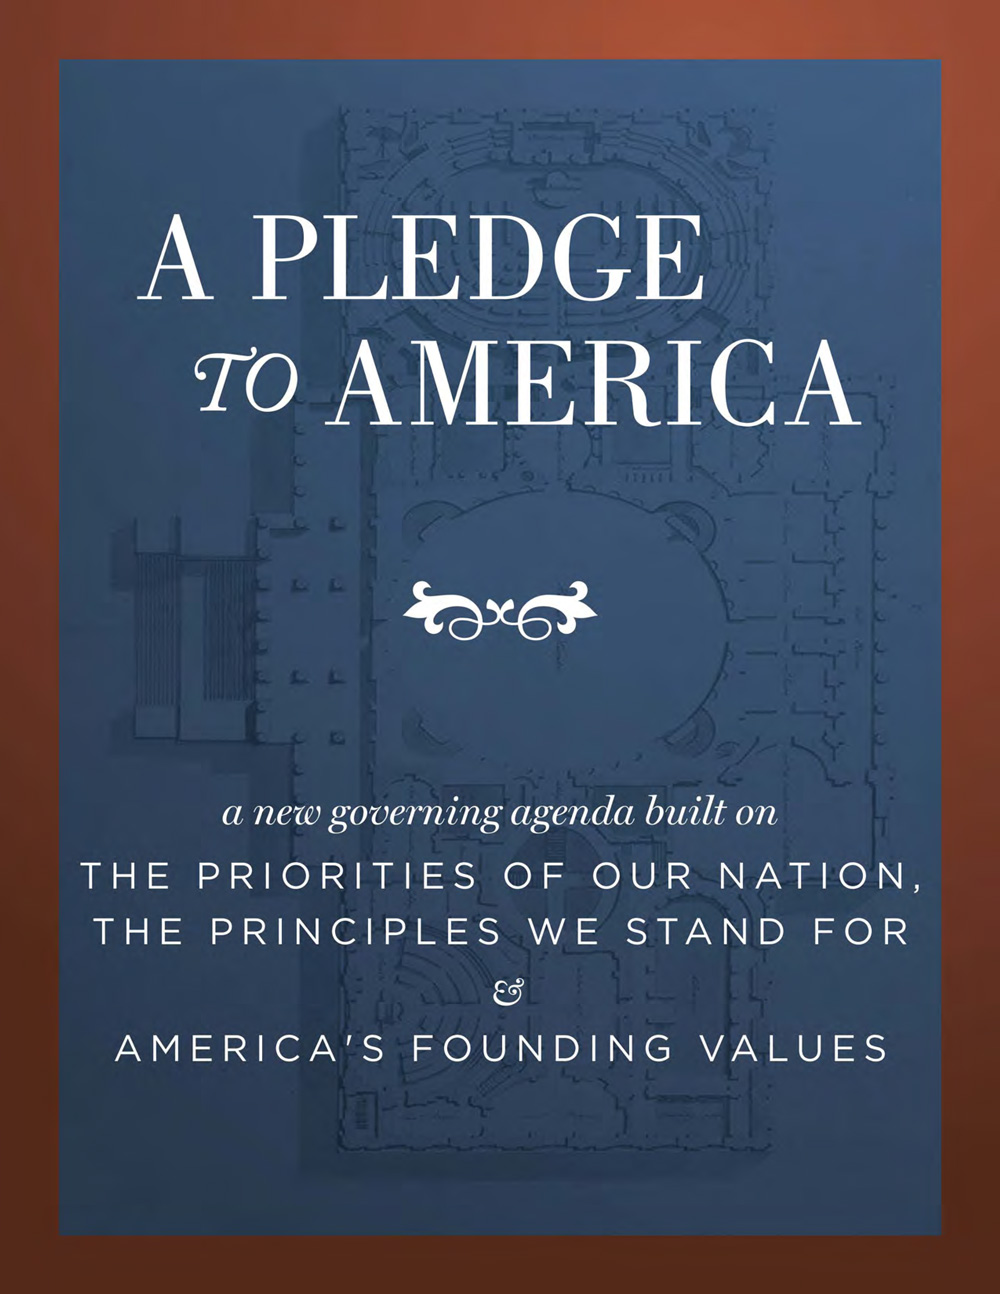 A pledge to America